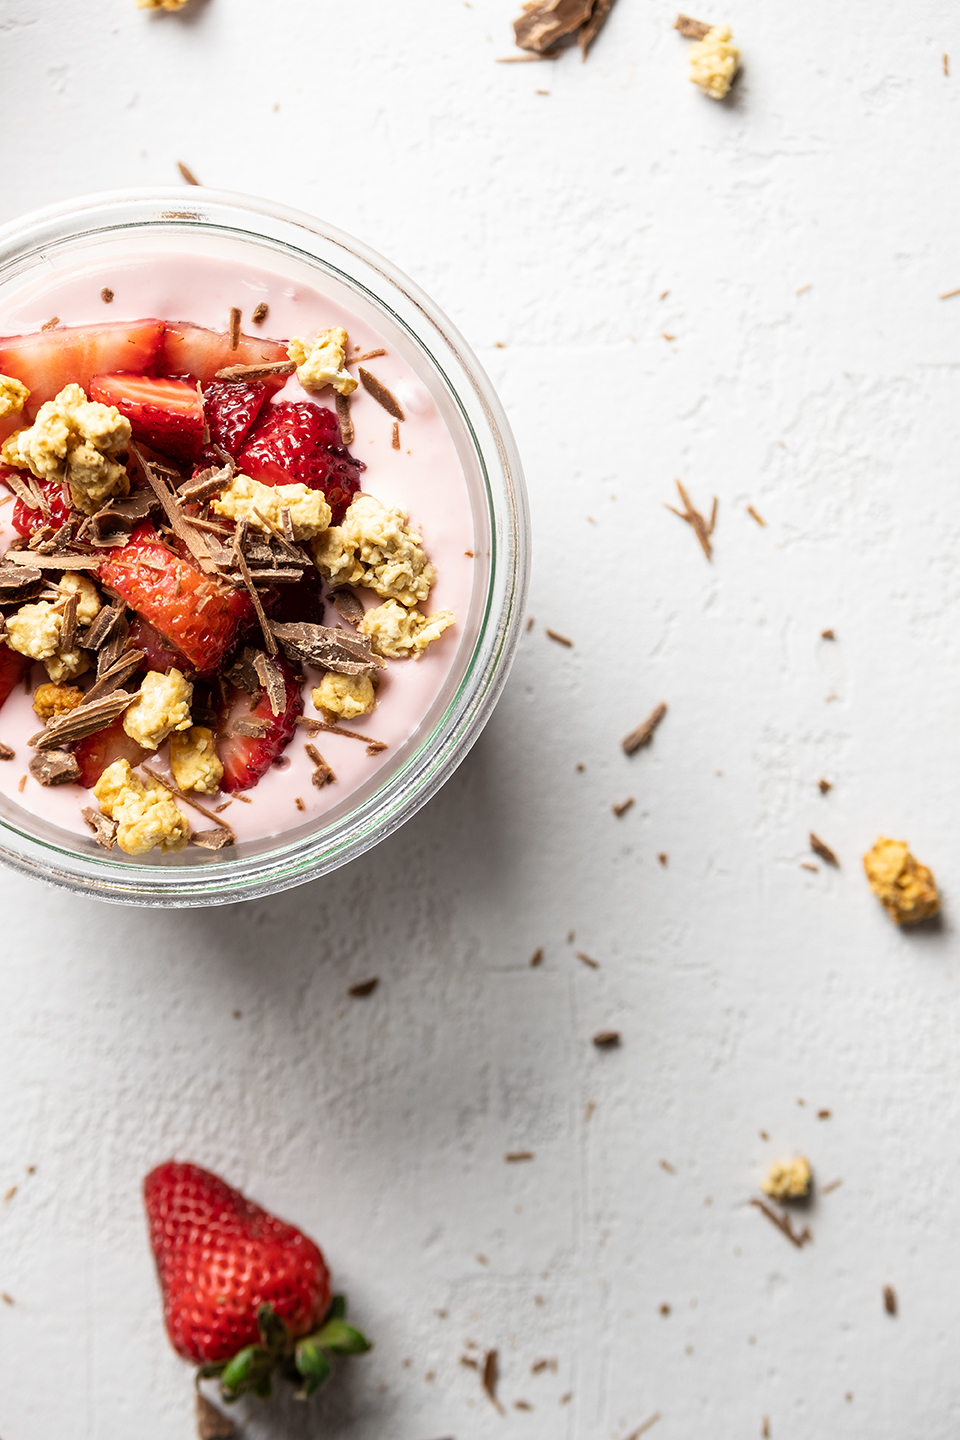  Creamy strawberry and greek yogurt with granola, strawberries and shaved chocolate on textured white background. 